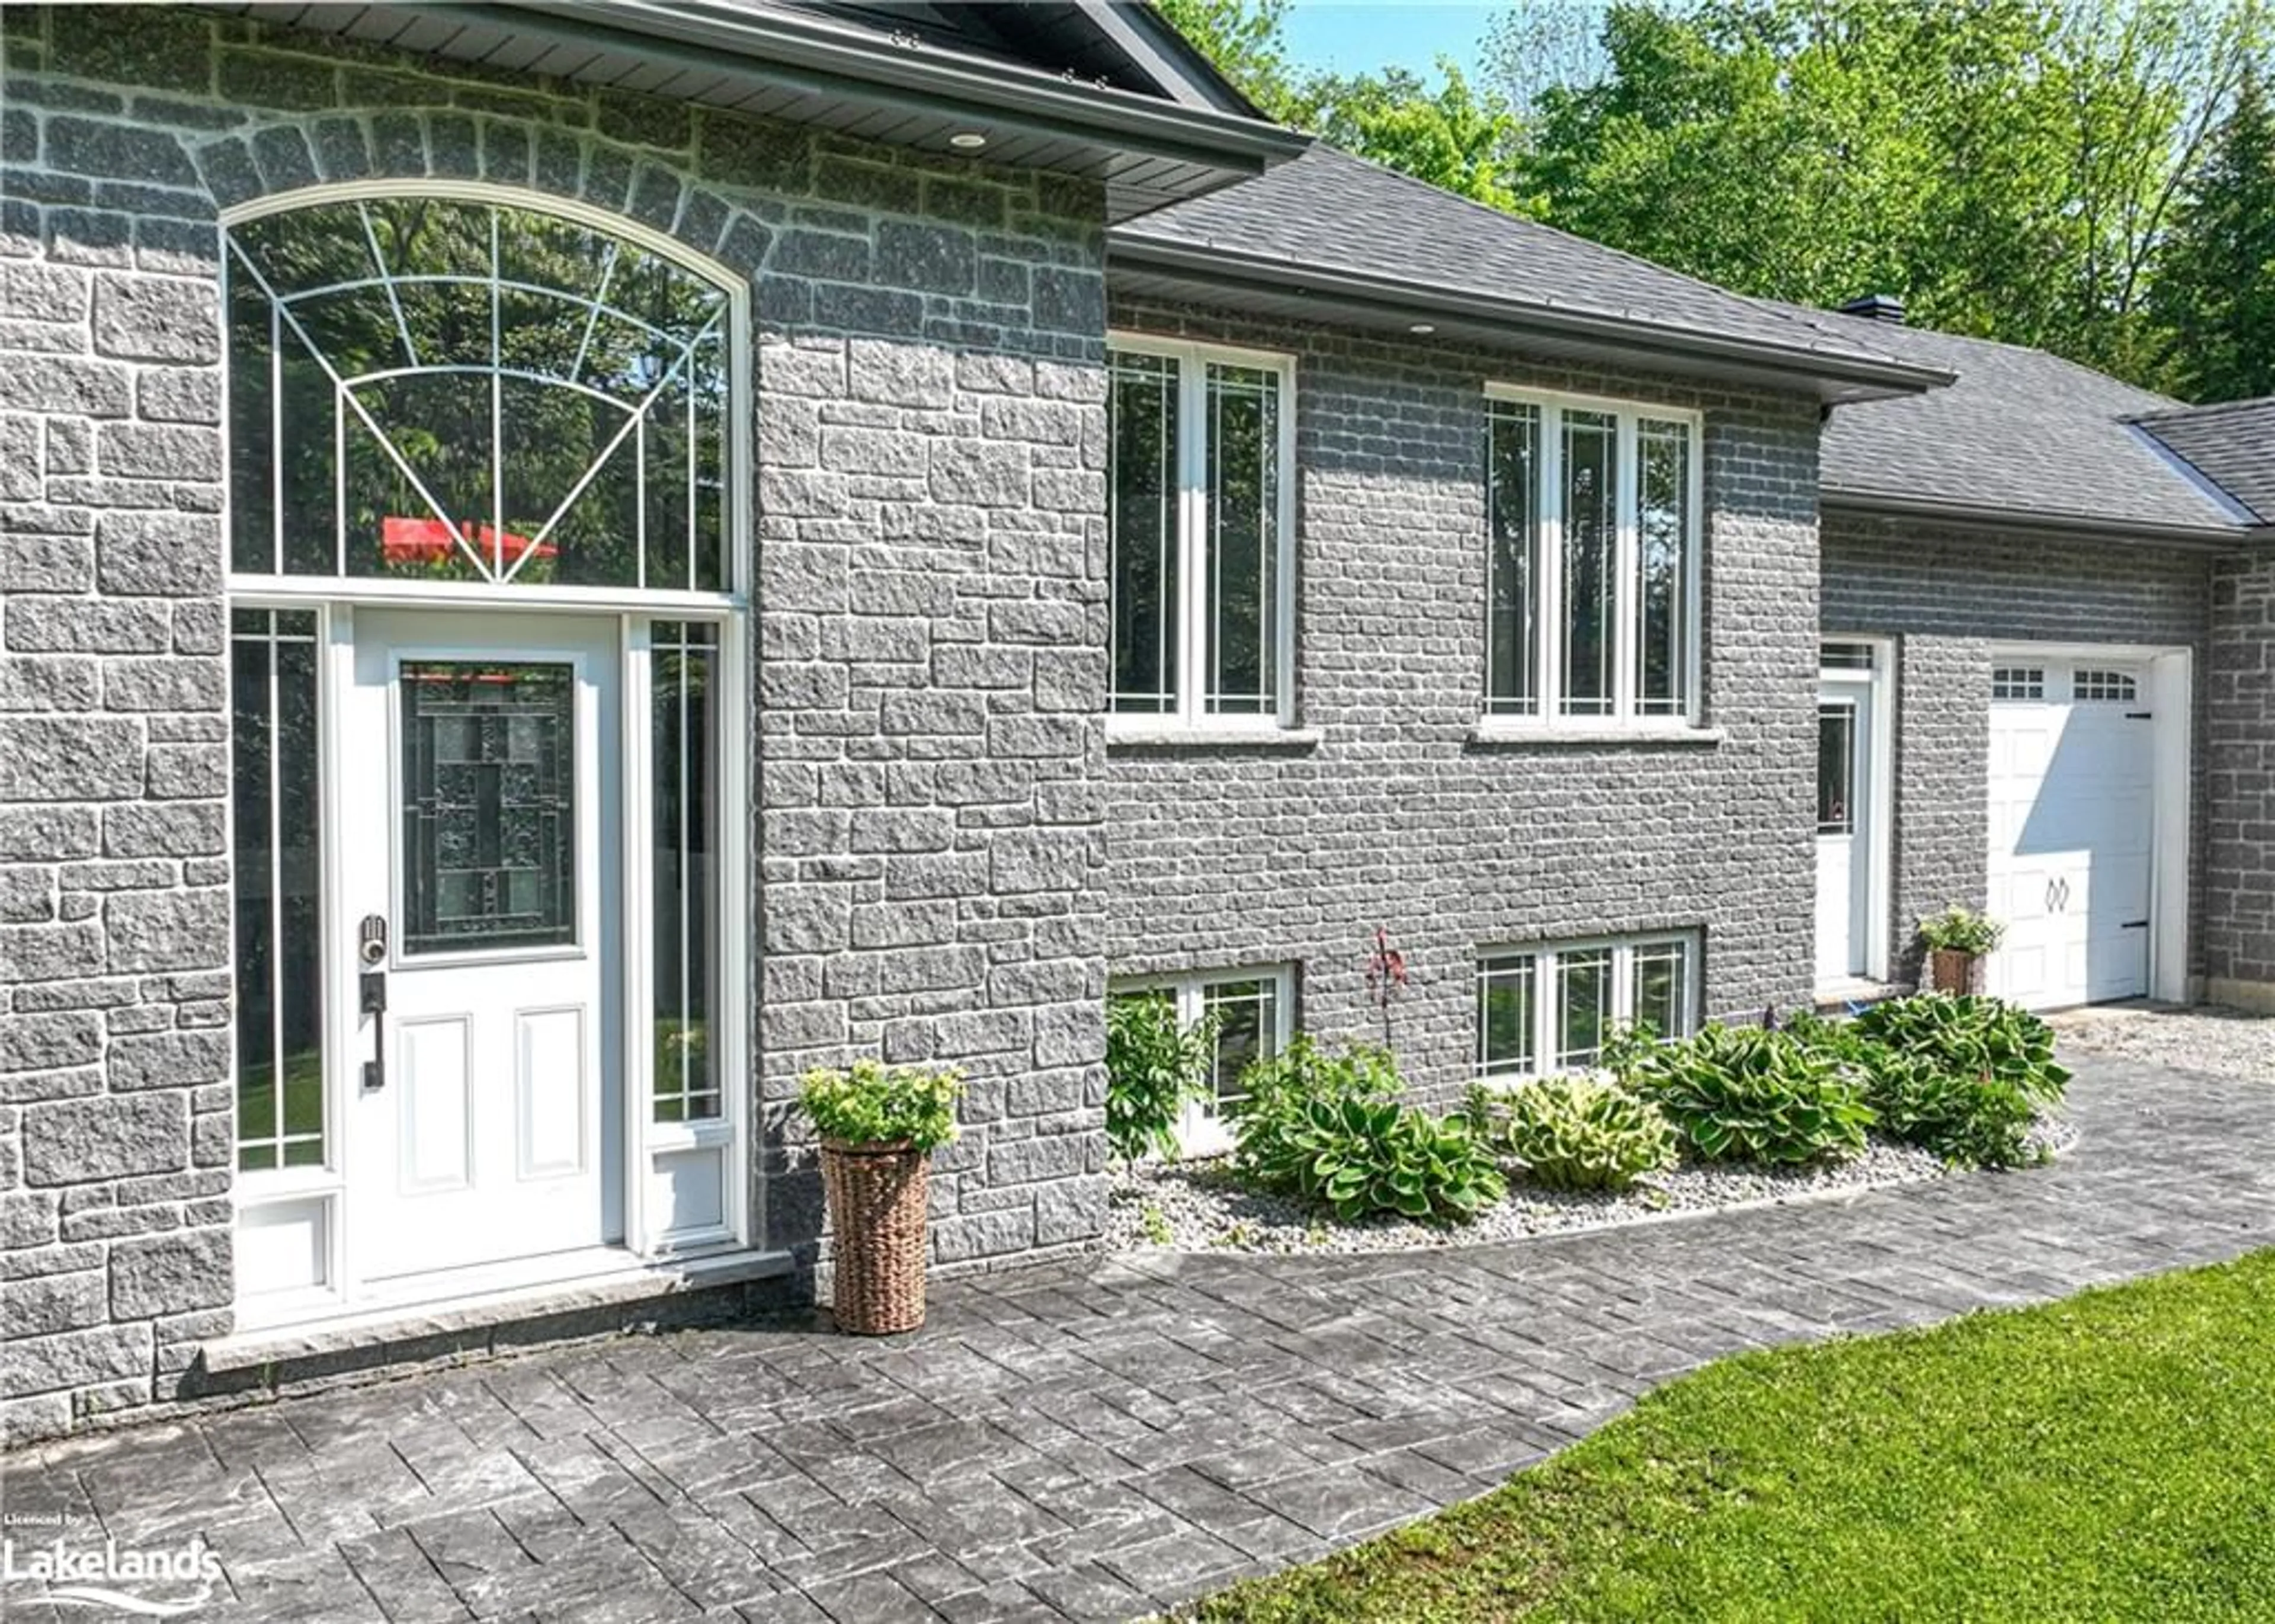 Home with brick exterior material for 1430 Rimkey Cres, Severn Ontario L3V 0E9